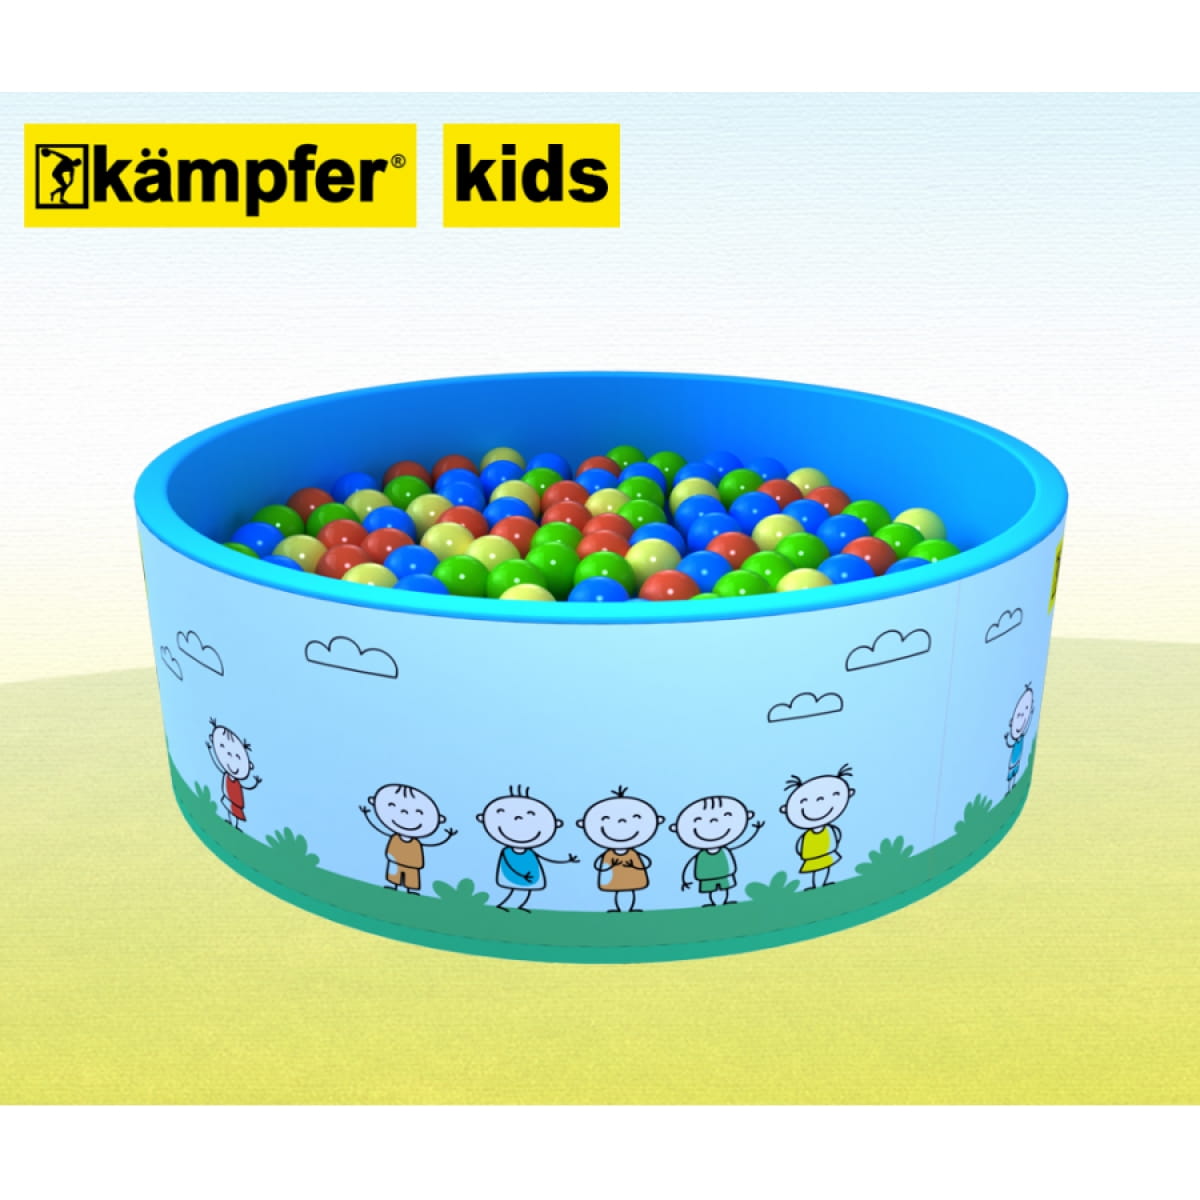    Kampfer Kids -  ( )